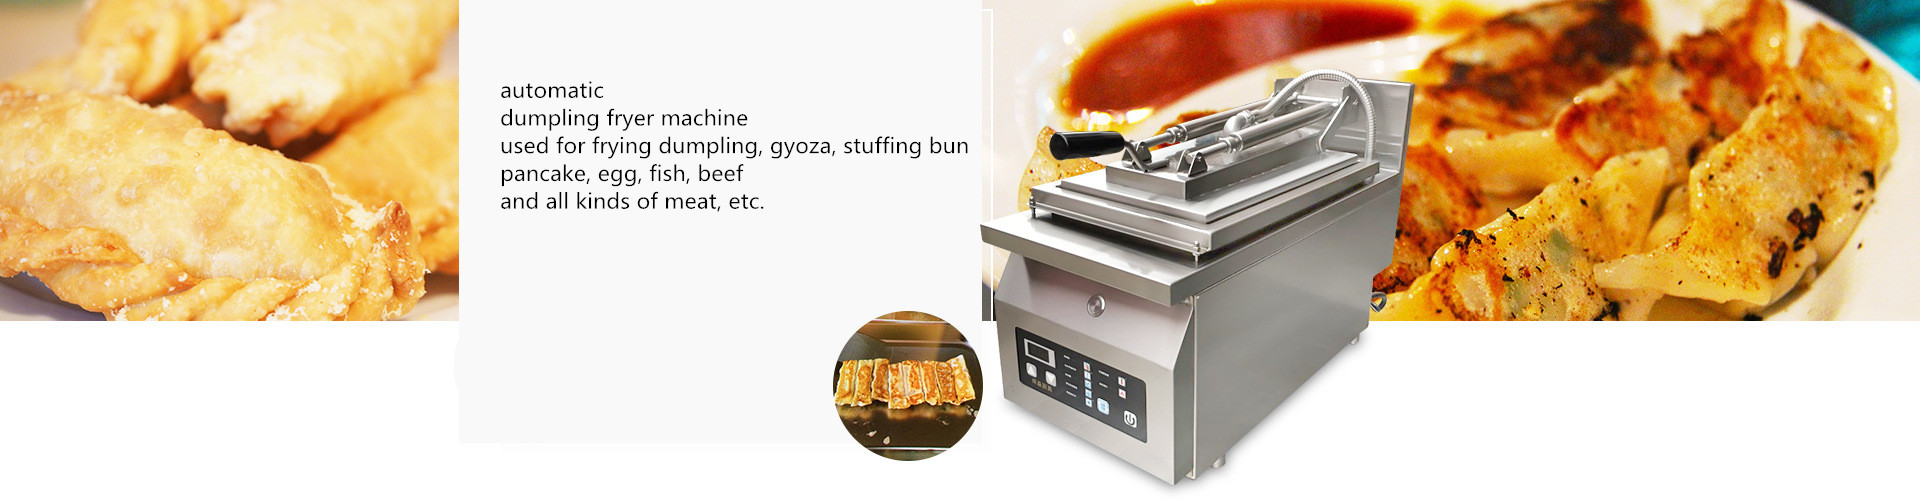  dumpling cooking machine